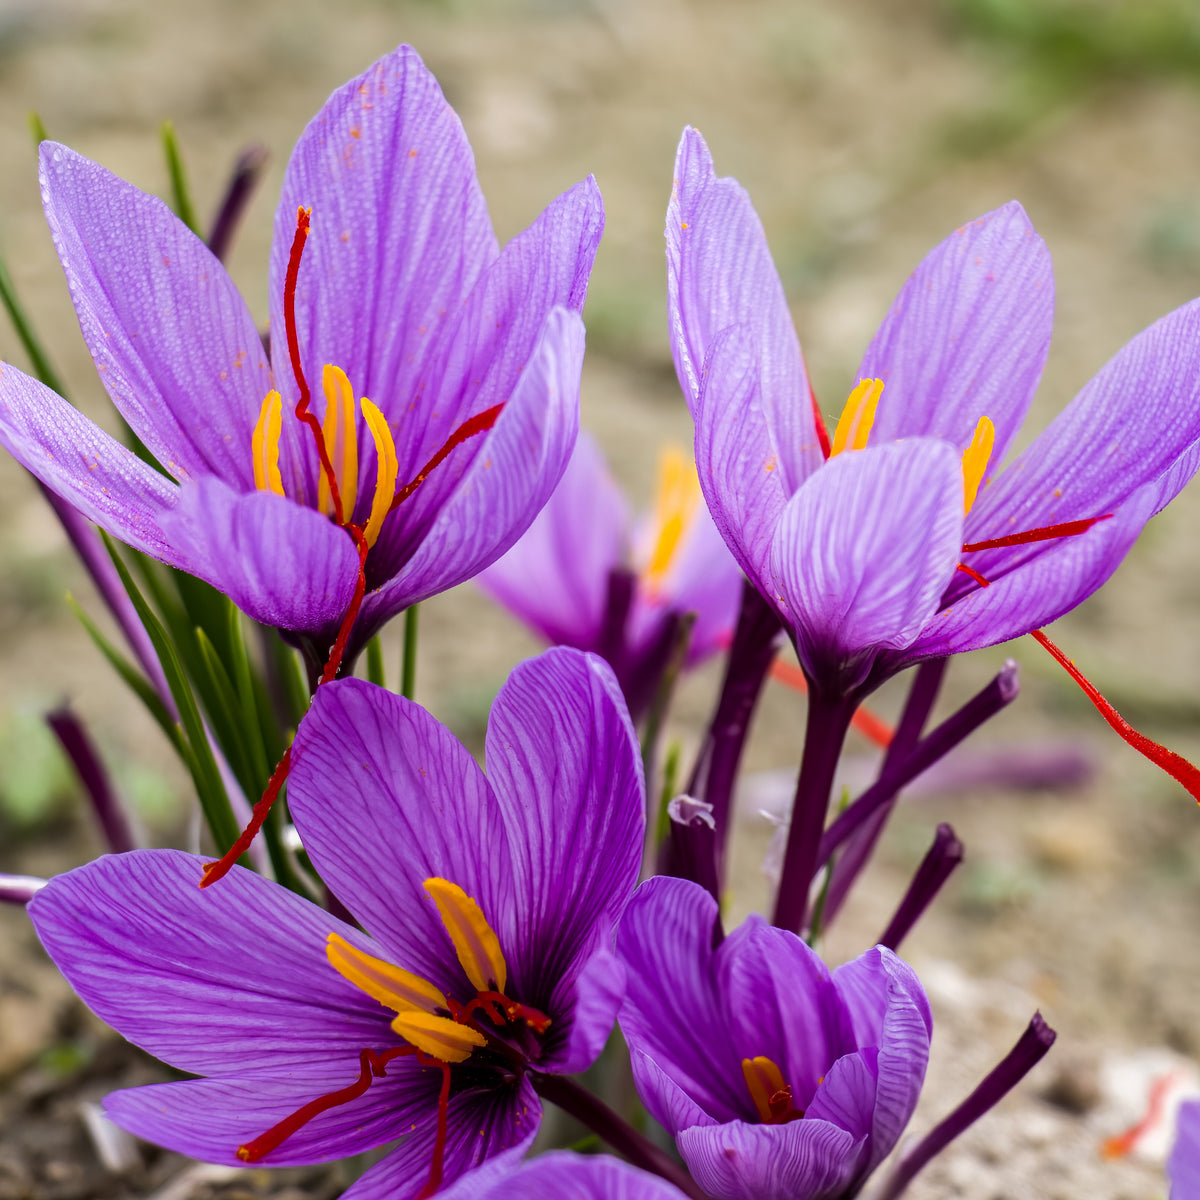 10 Crocus safran - Crocus sativus - Crocus